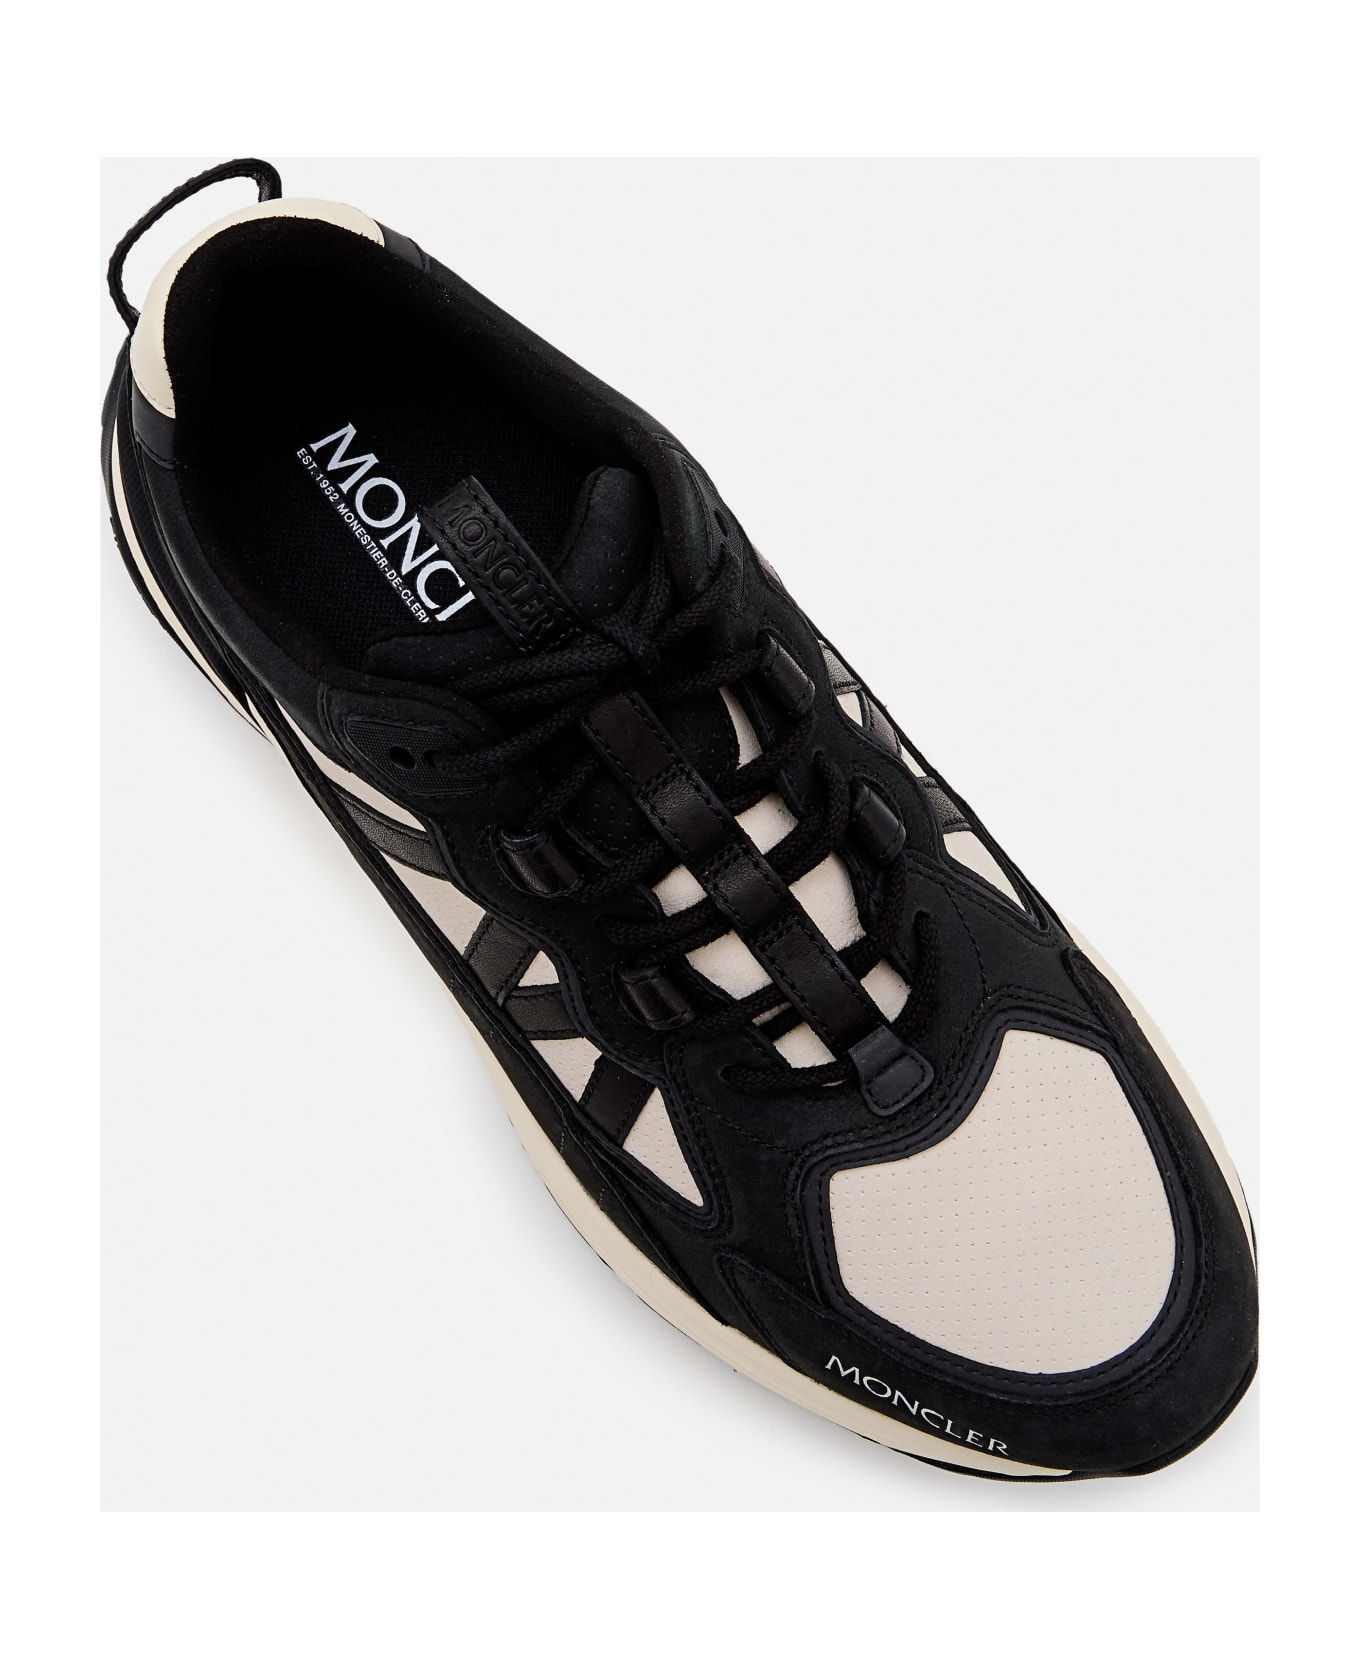 Moncler Lite Runner Low Top Sneakers - Black